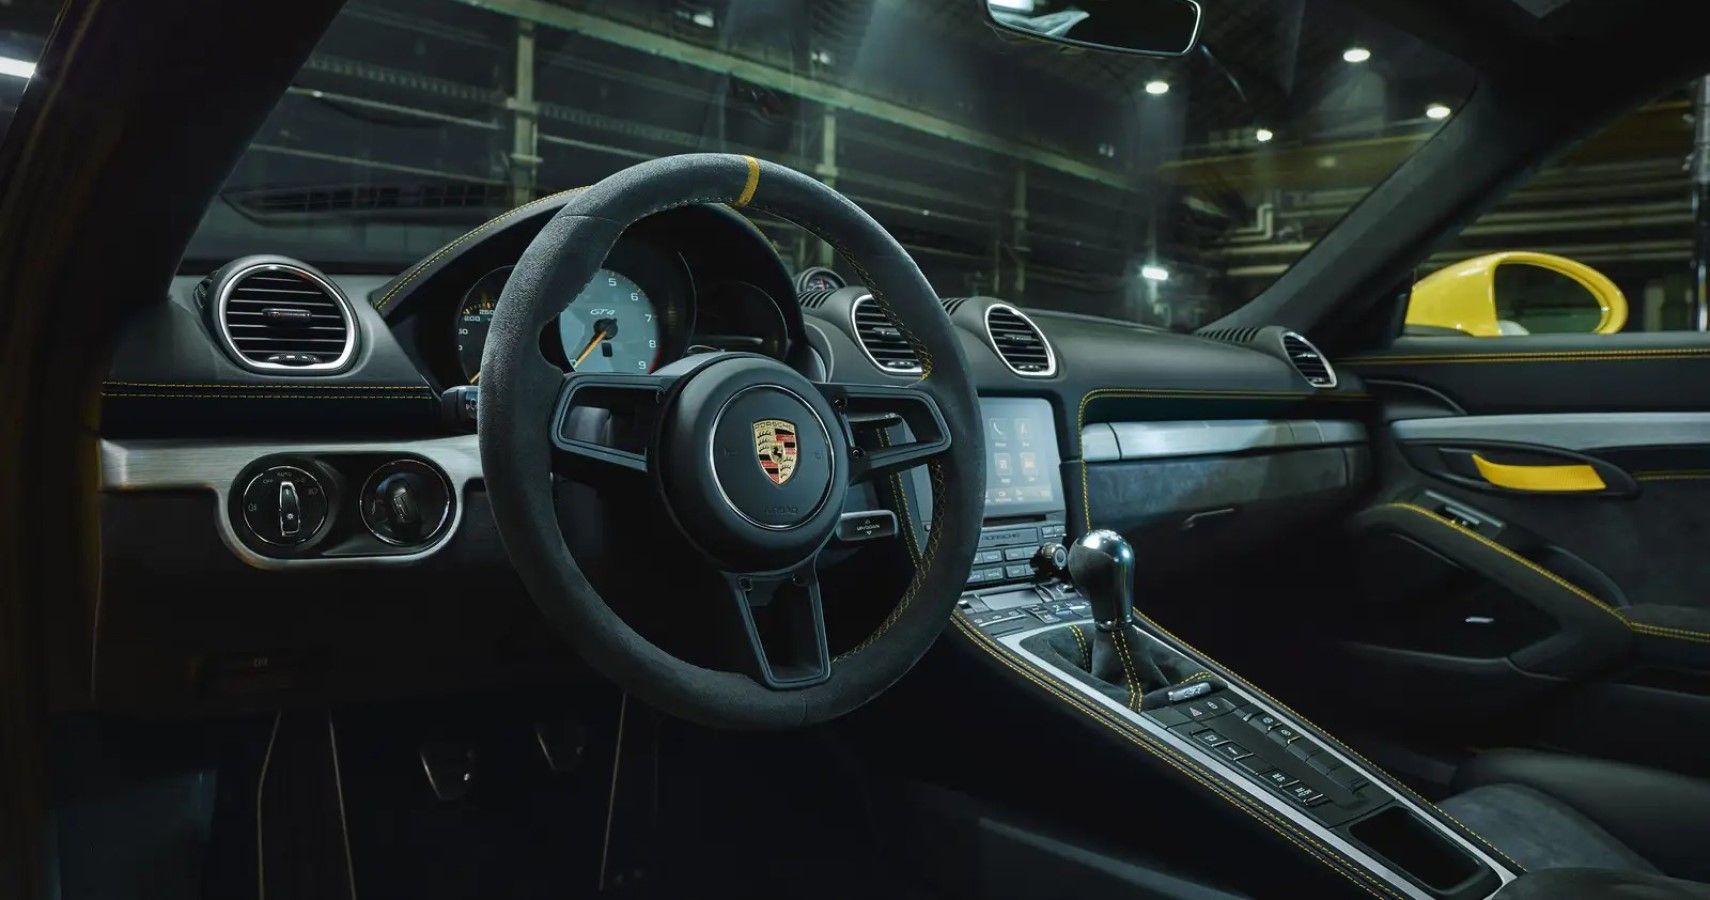 Porsche Cayman GT4 interior view